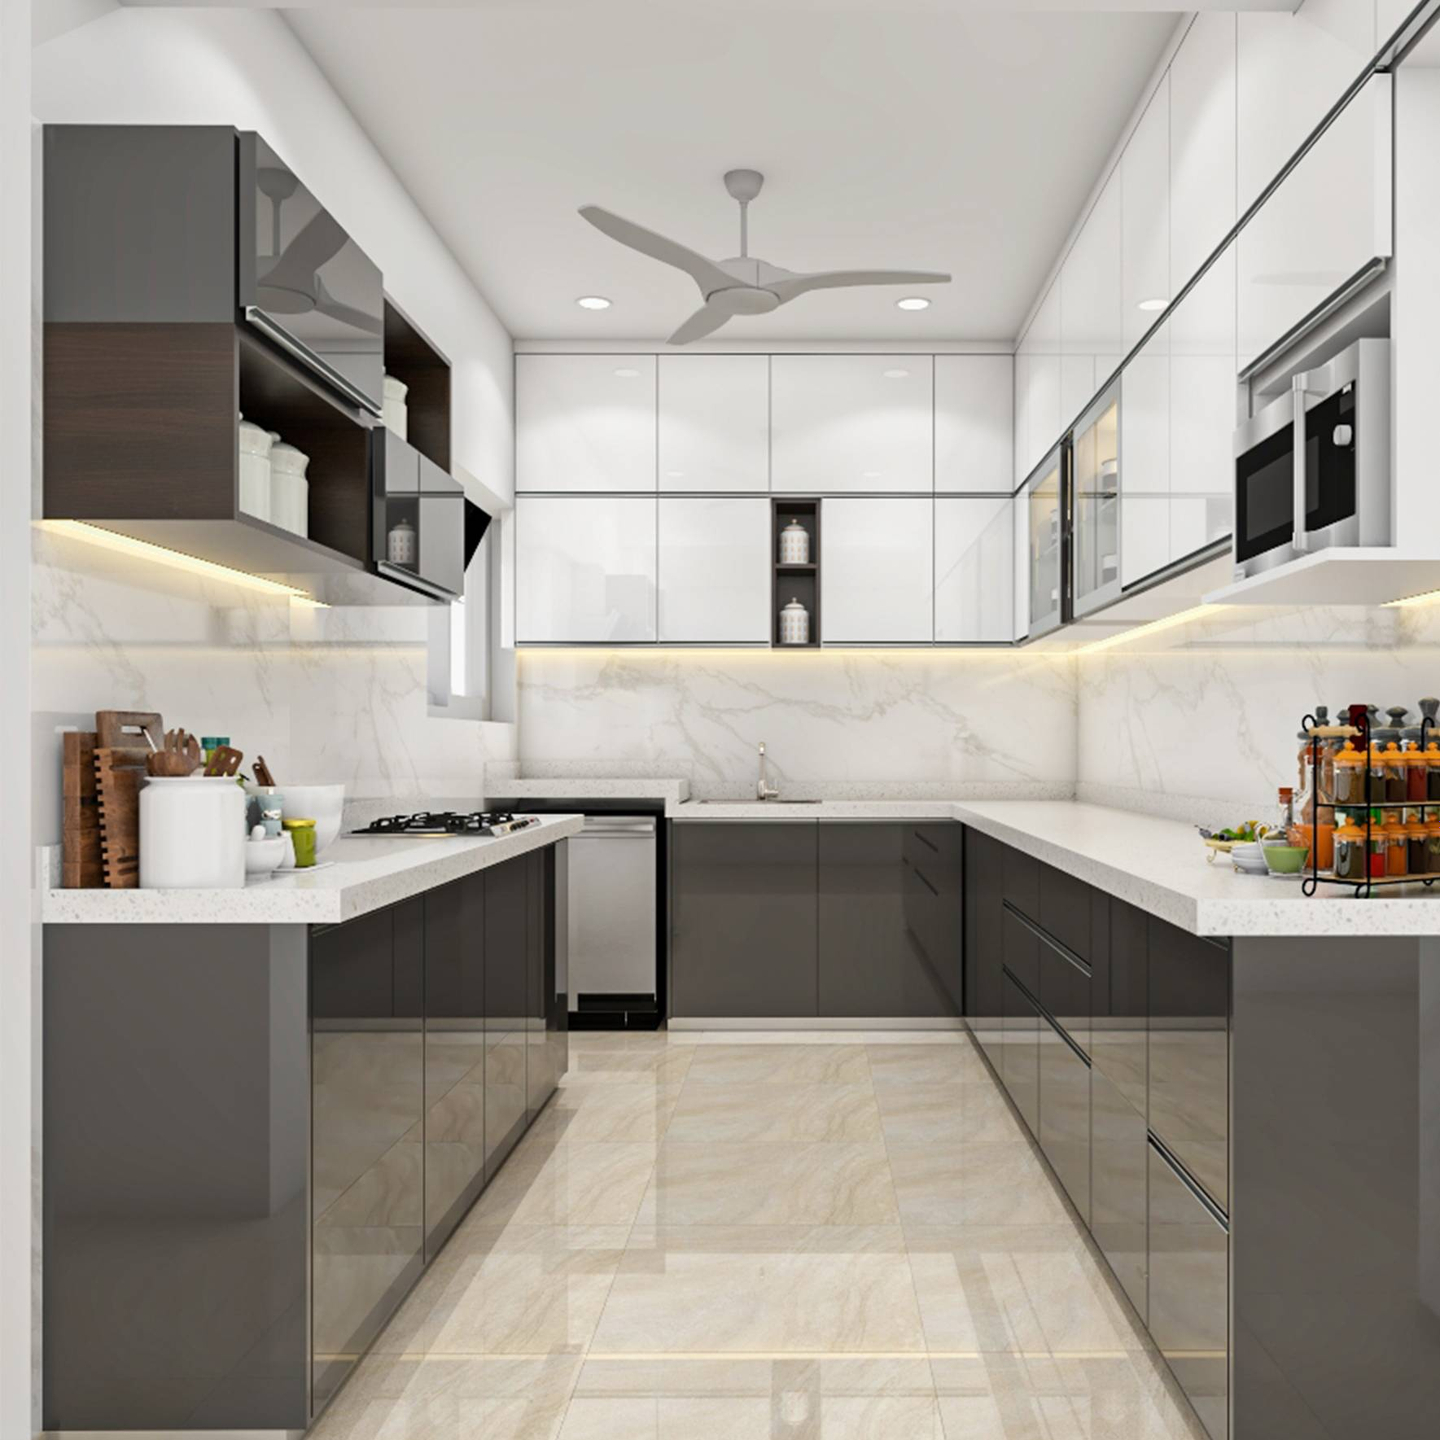 Parallel U-Shaped Kitchen Design - Livspace